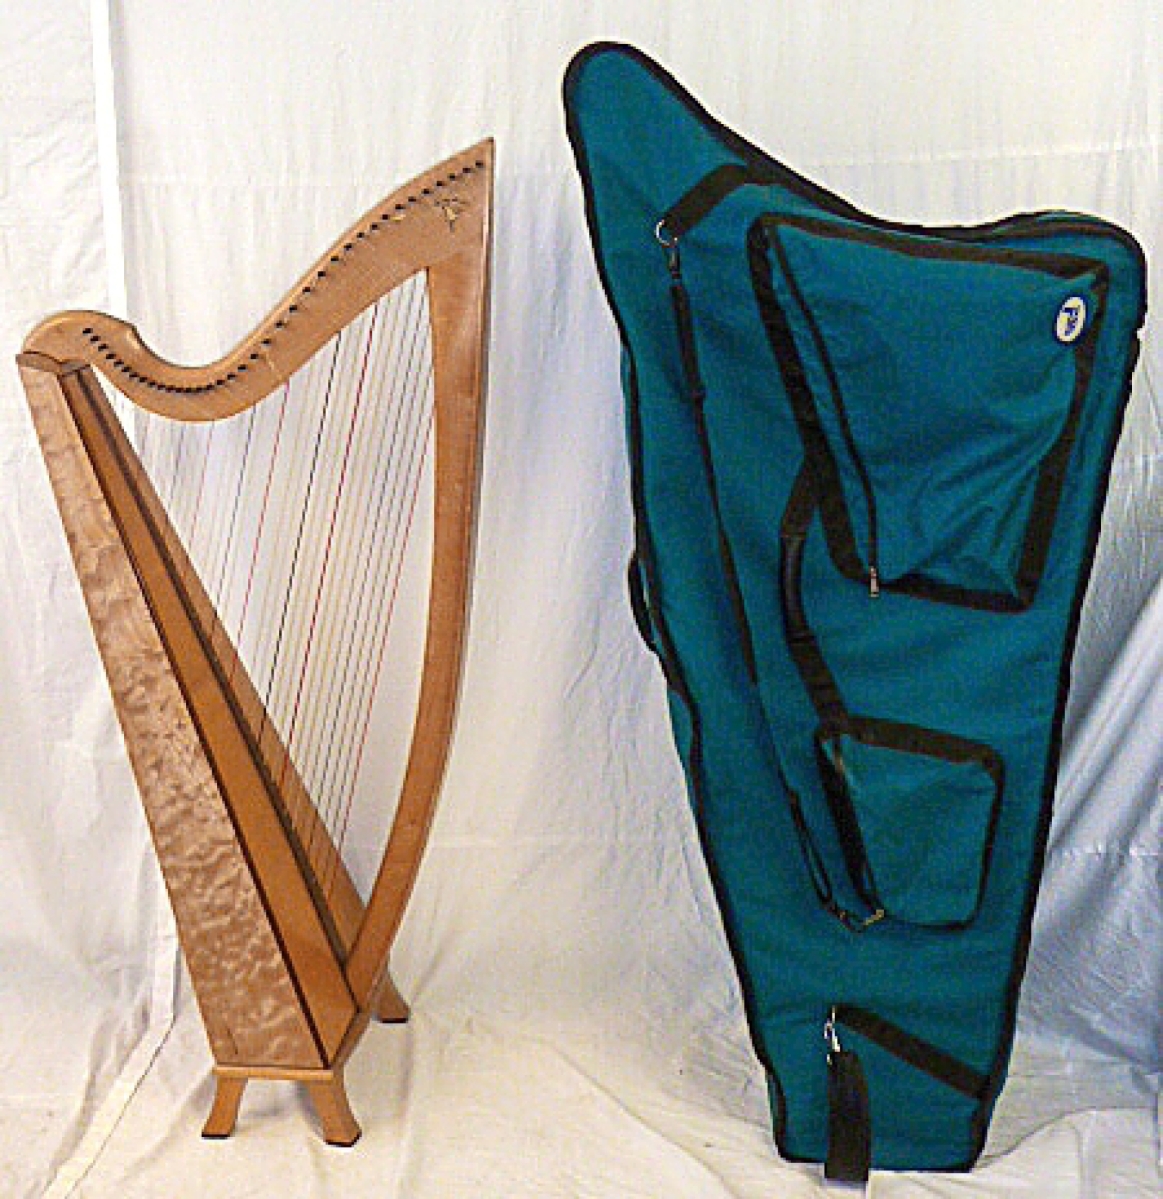 AB Fox & Crane harp